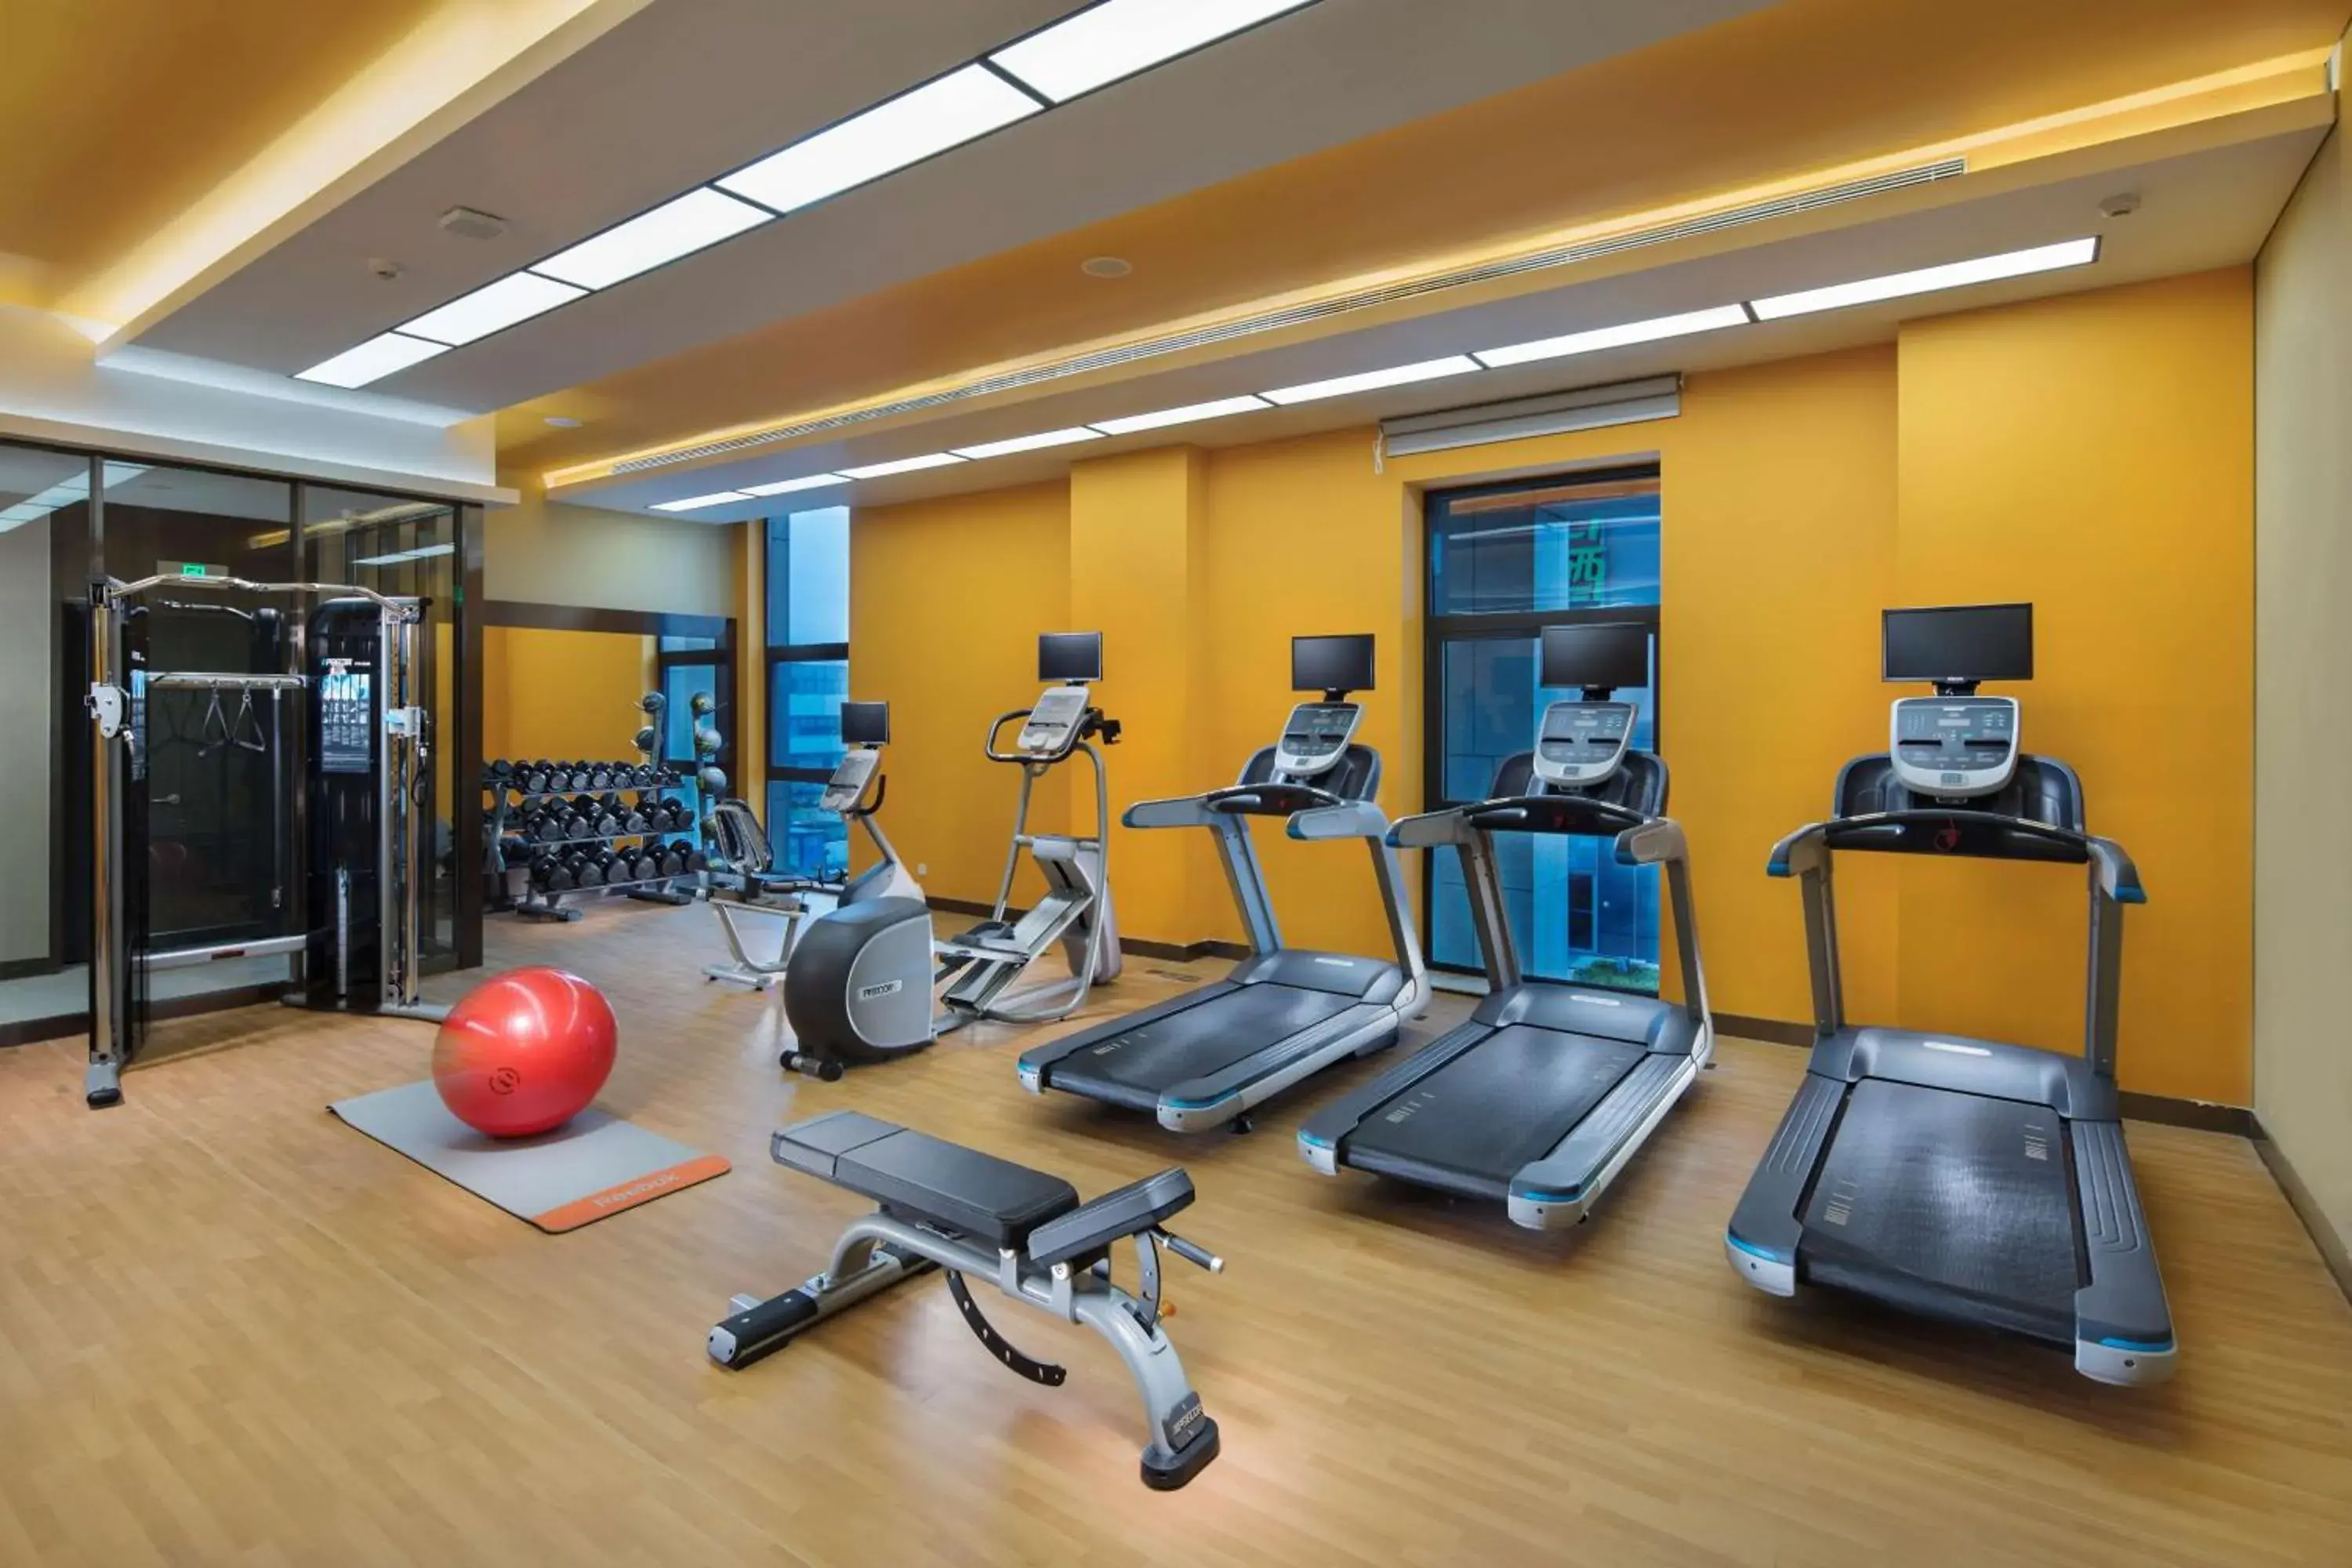 Fitness centre/facilities, Fitness Center/Facilities in Hilton Garden Inn Shanghai Hongqiao